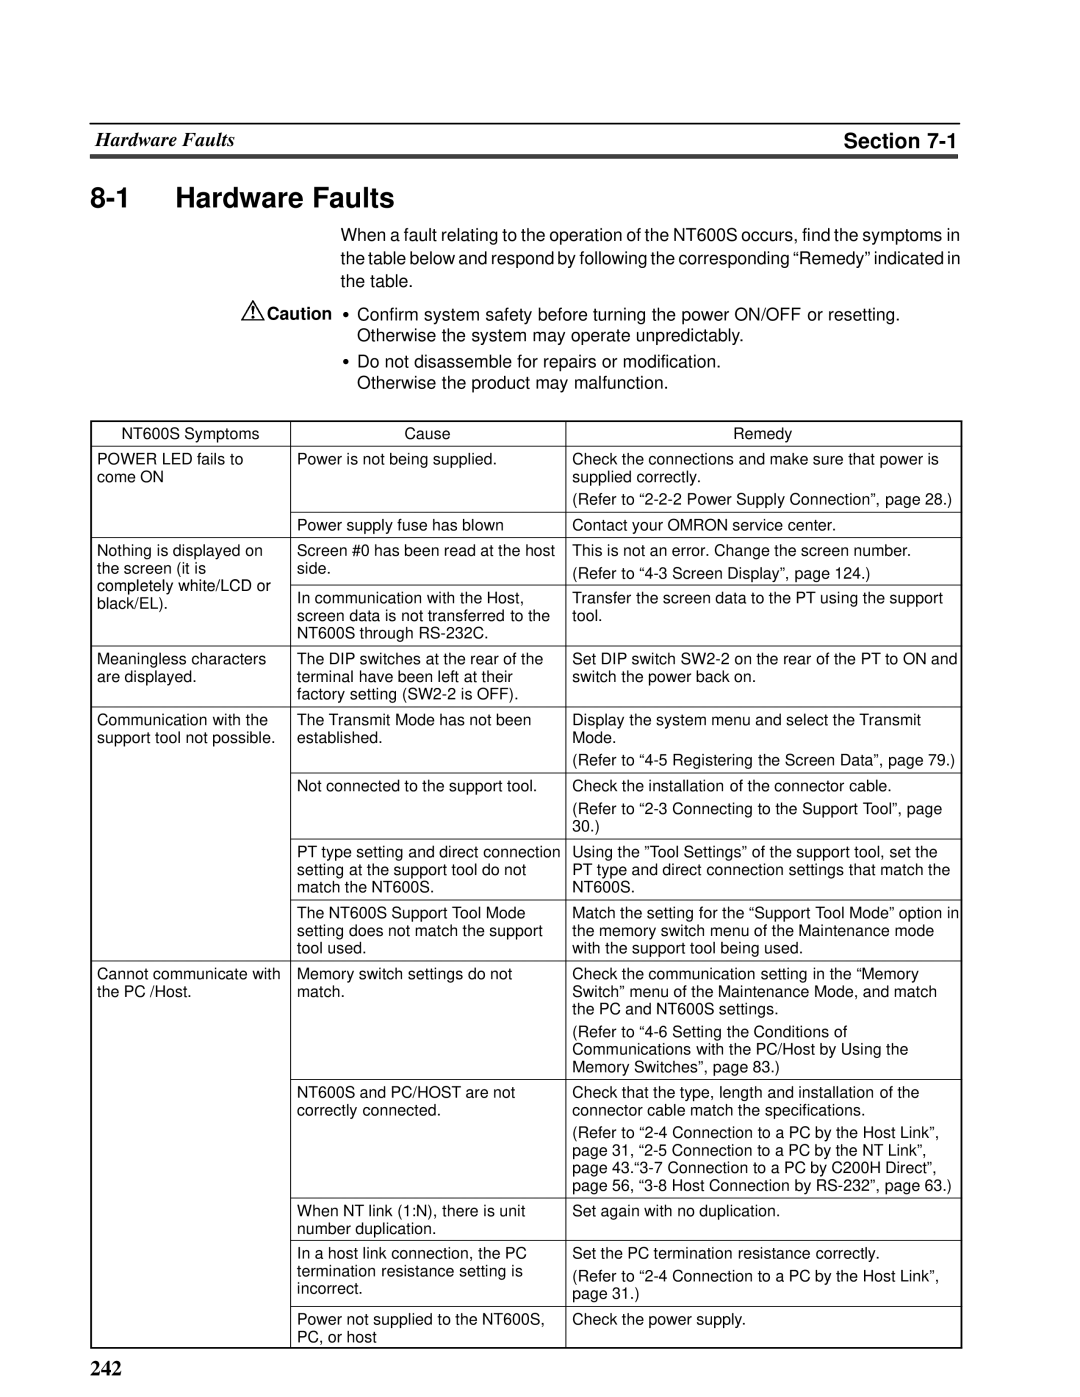 Omron V022-E3-1 operation manual 8-1Hardware Faults, Section 